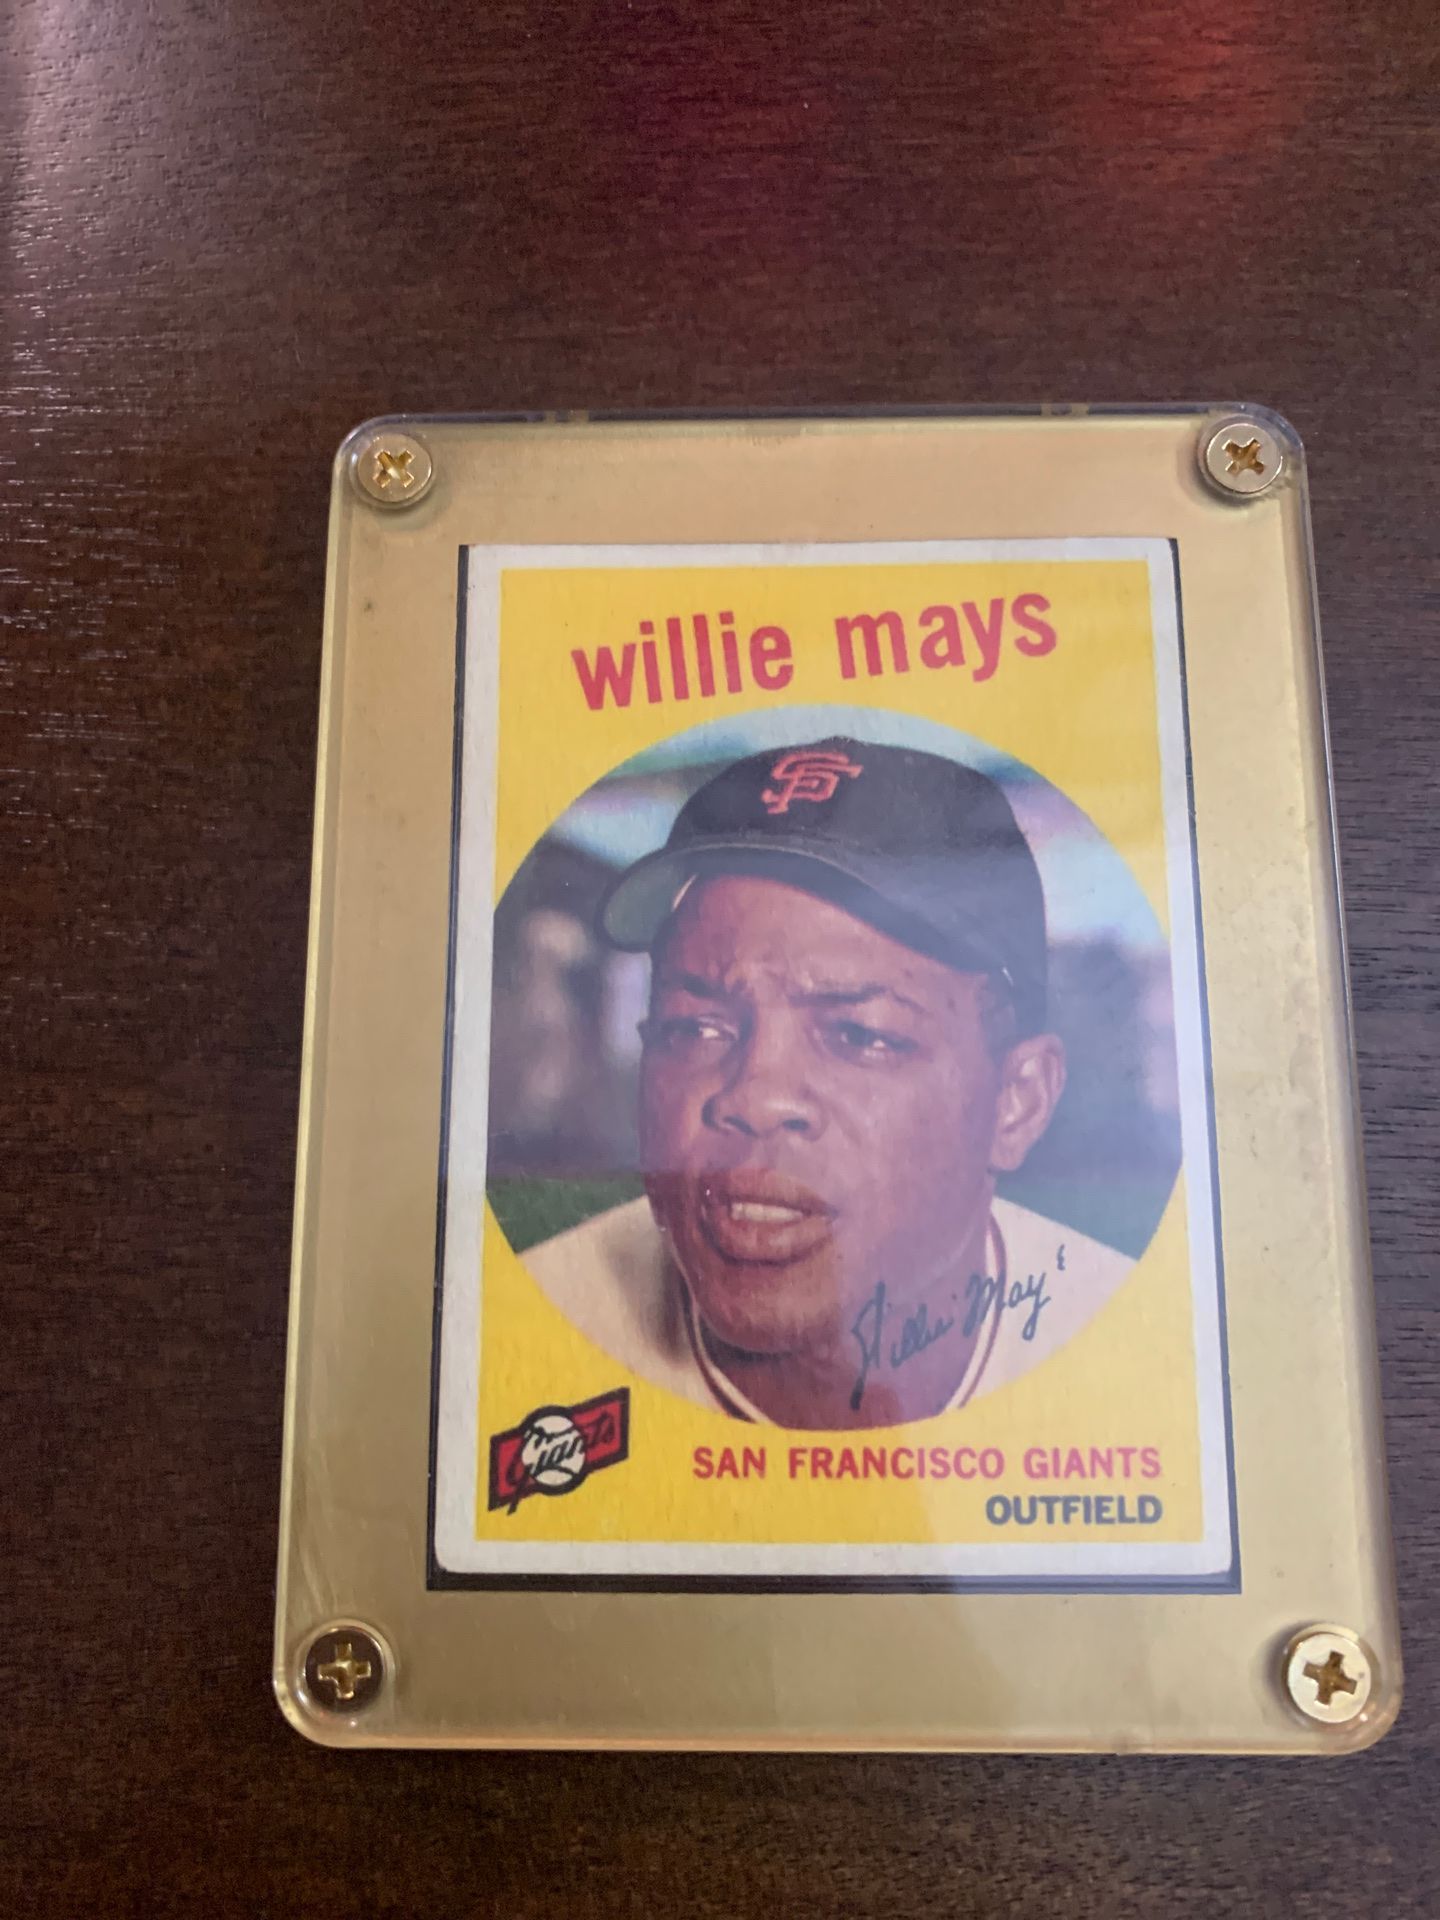 Original Willie Mays baseball card